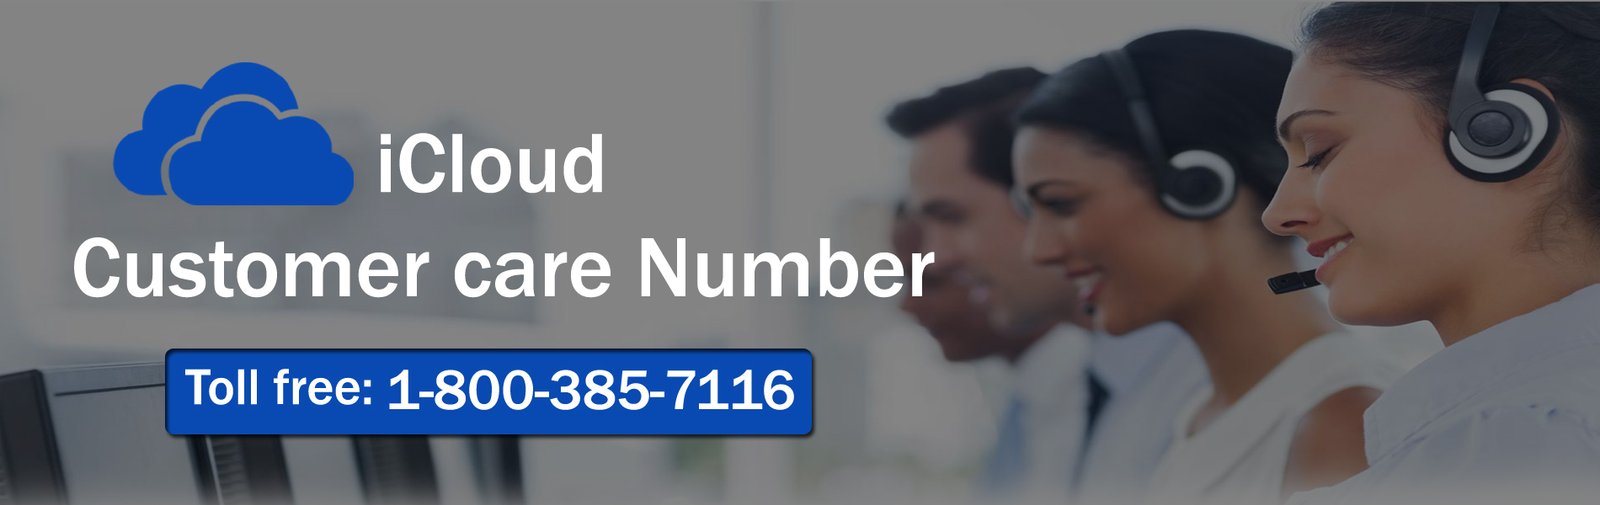 iCloud customer care number 